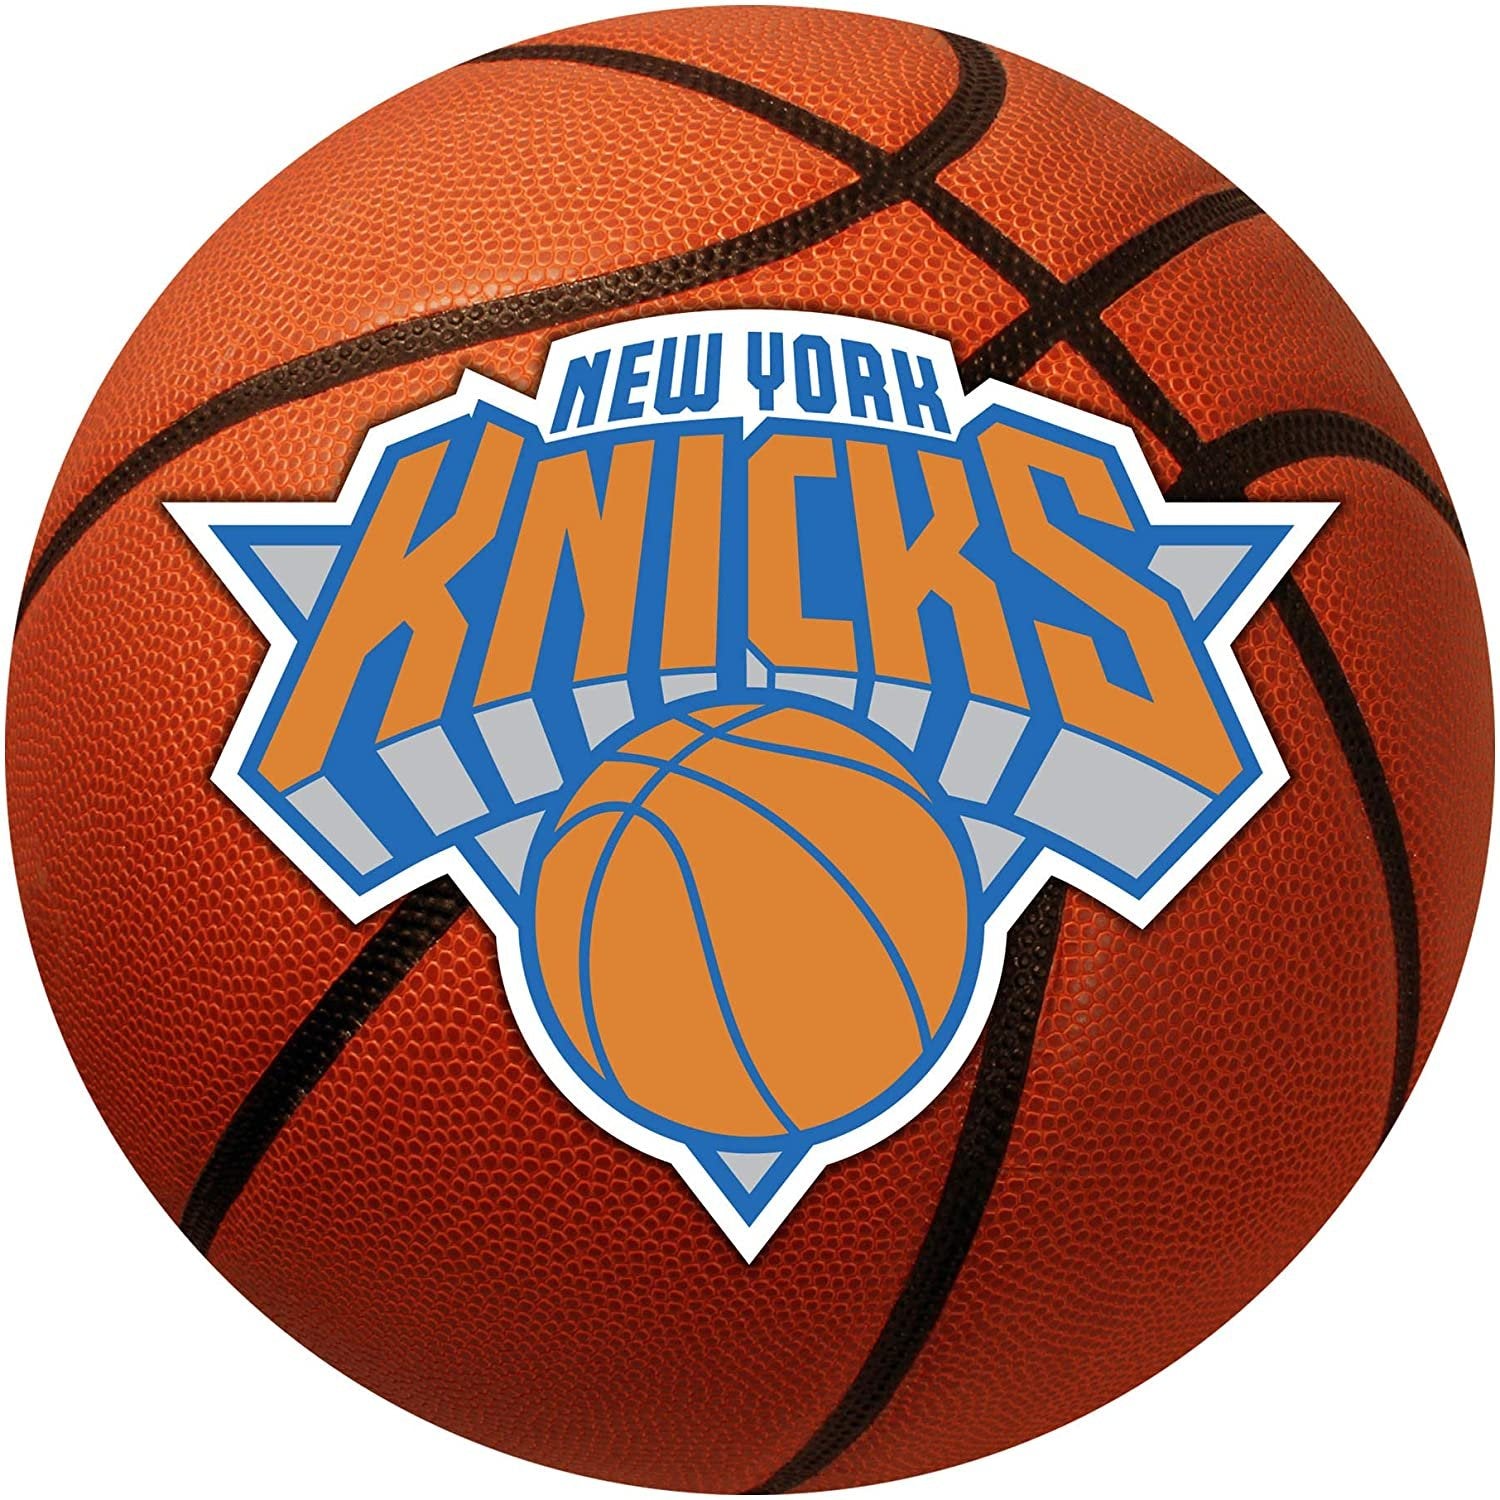 New York Knicks 27 Inch Area Rug Floor Mat, Nylon, Anti-Skid Backing, Basketball Shaped